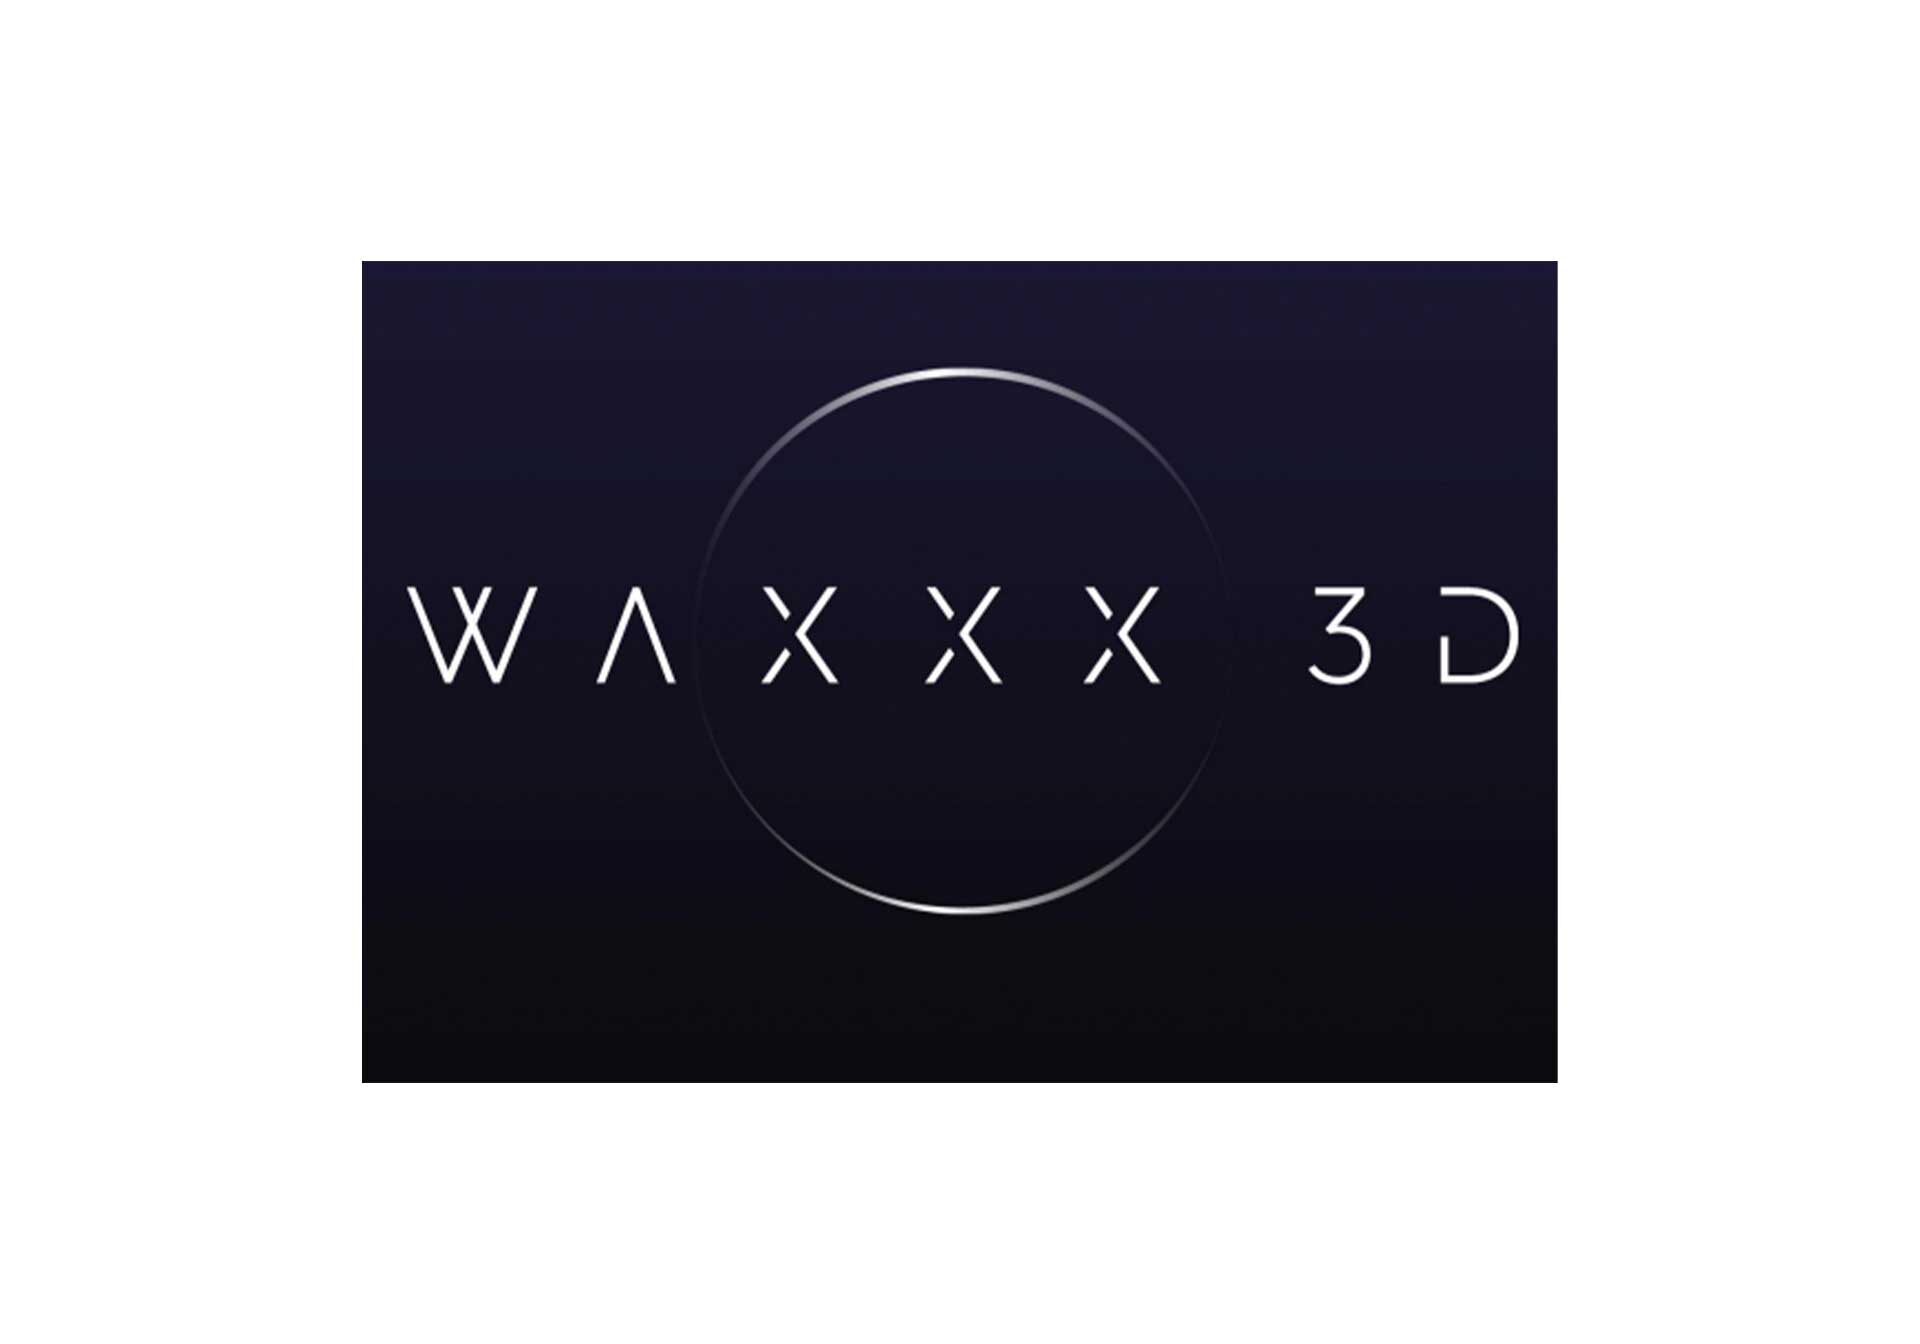 Waxxx3D